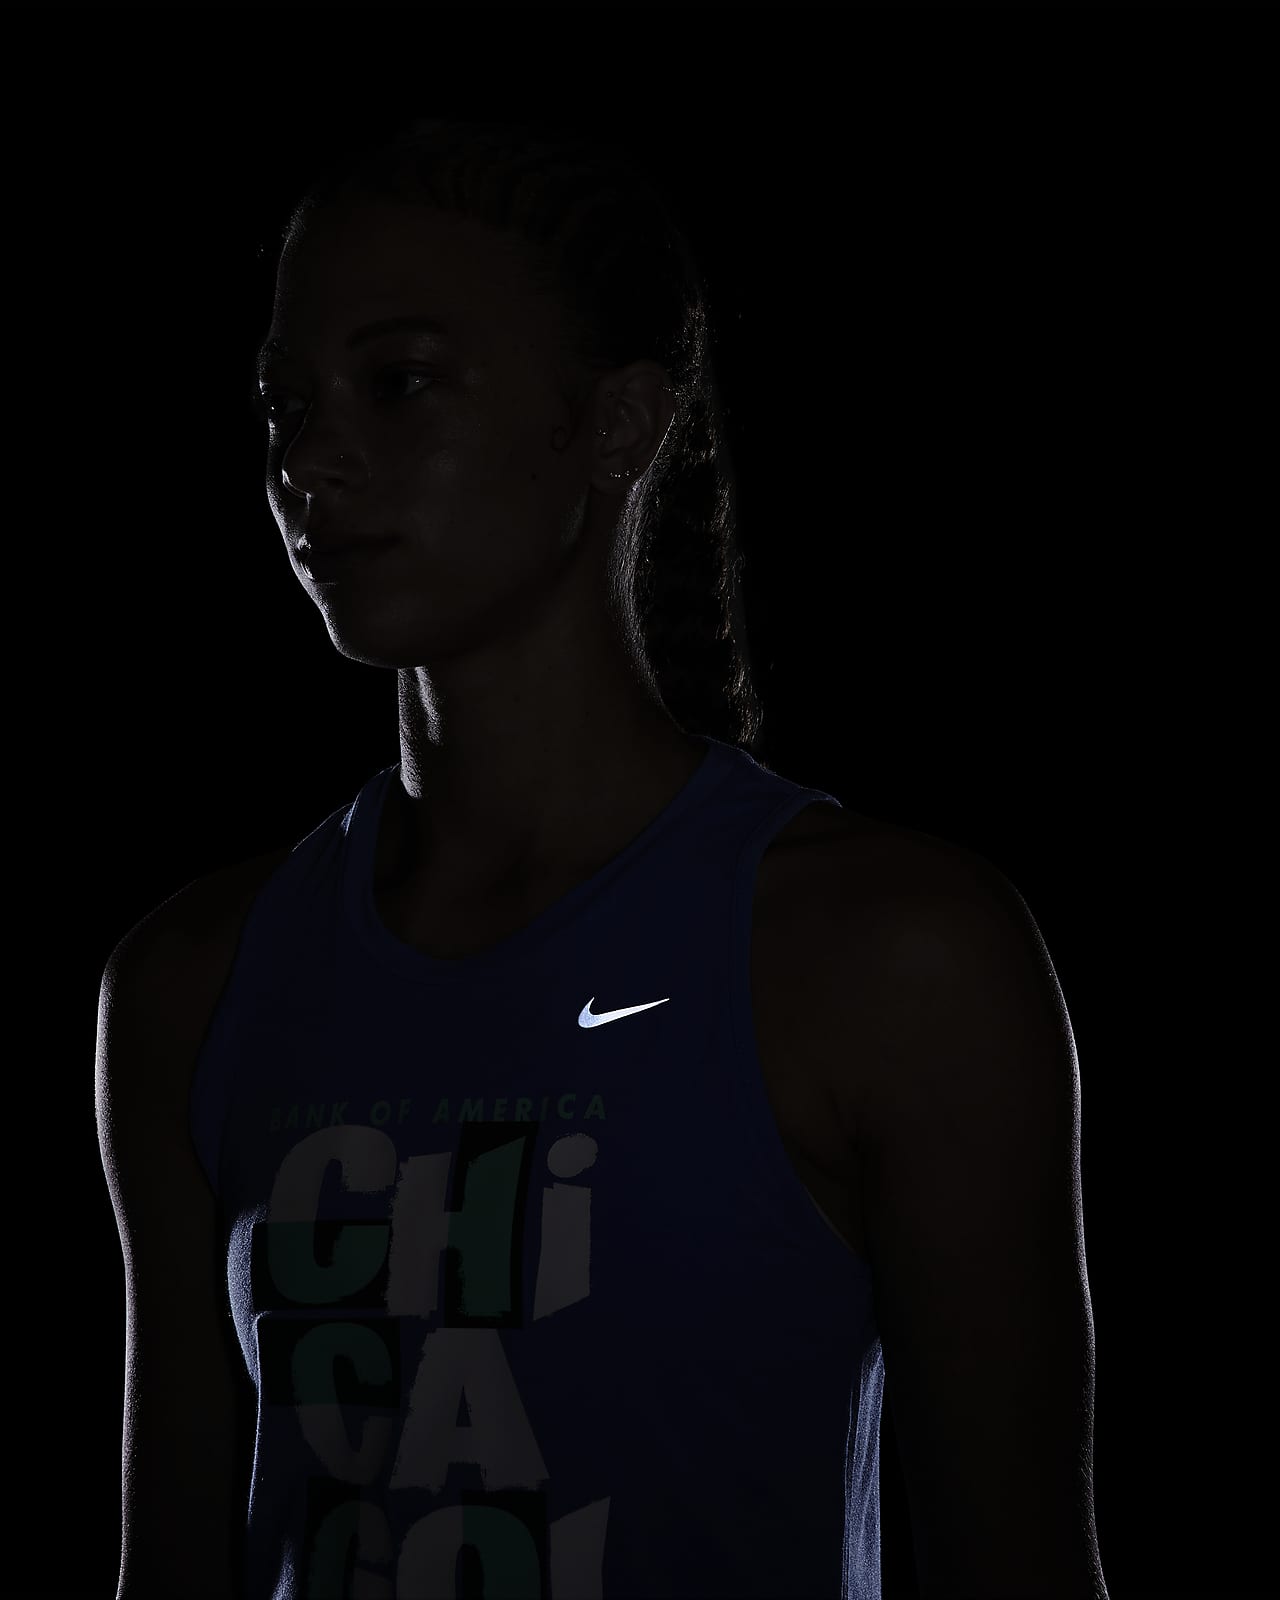 Nike Women's Dri-FIT One Luxe Slim Fit Tank Top